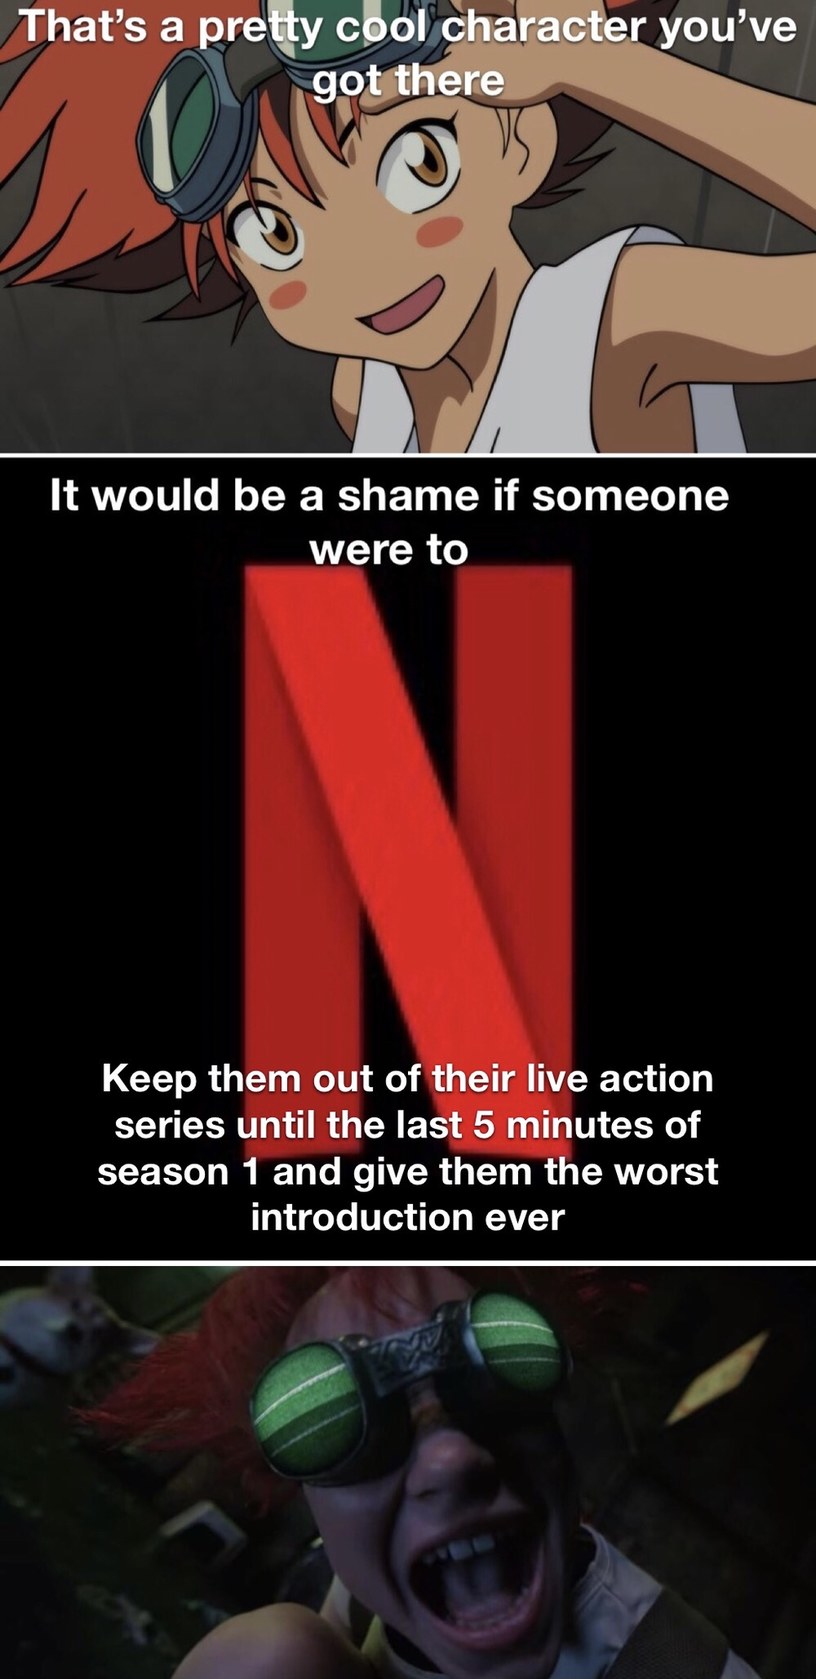 Netflix with Cowboy Bebop be like - meme